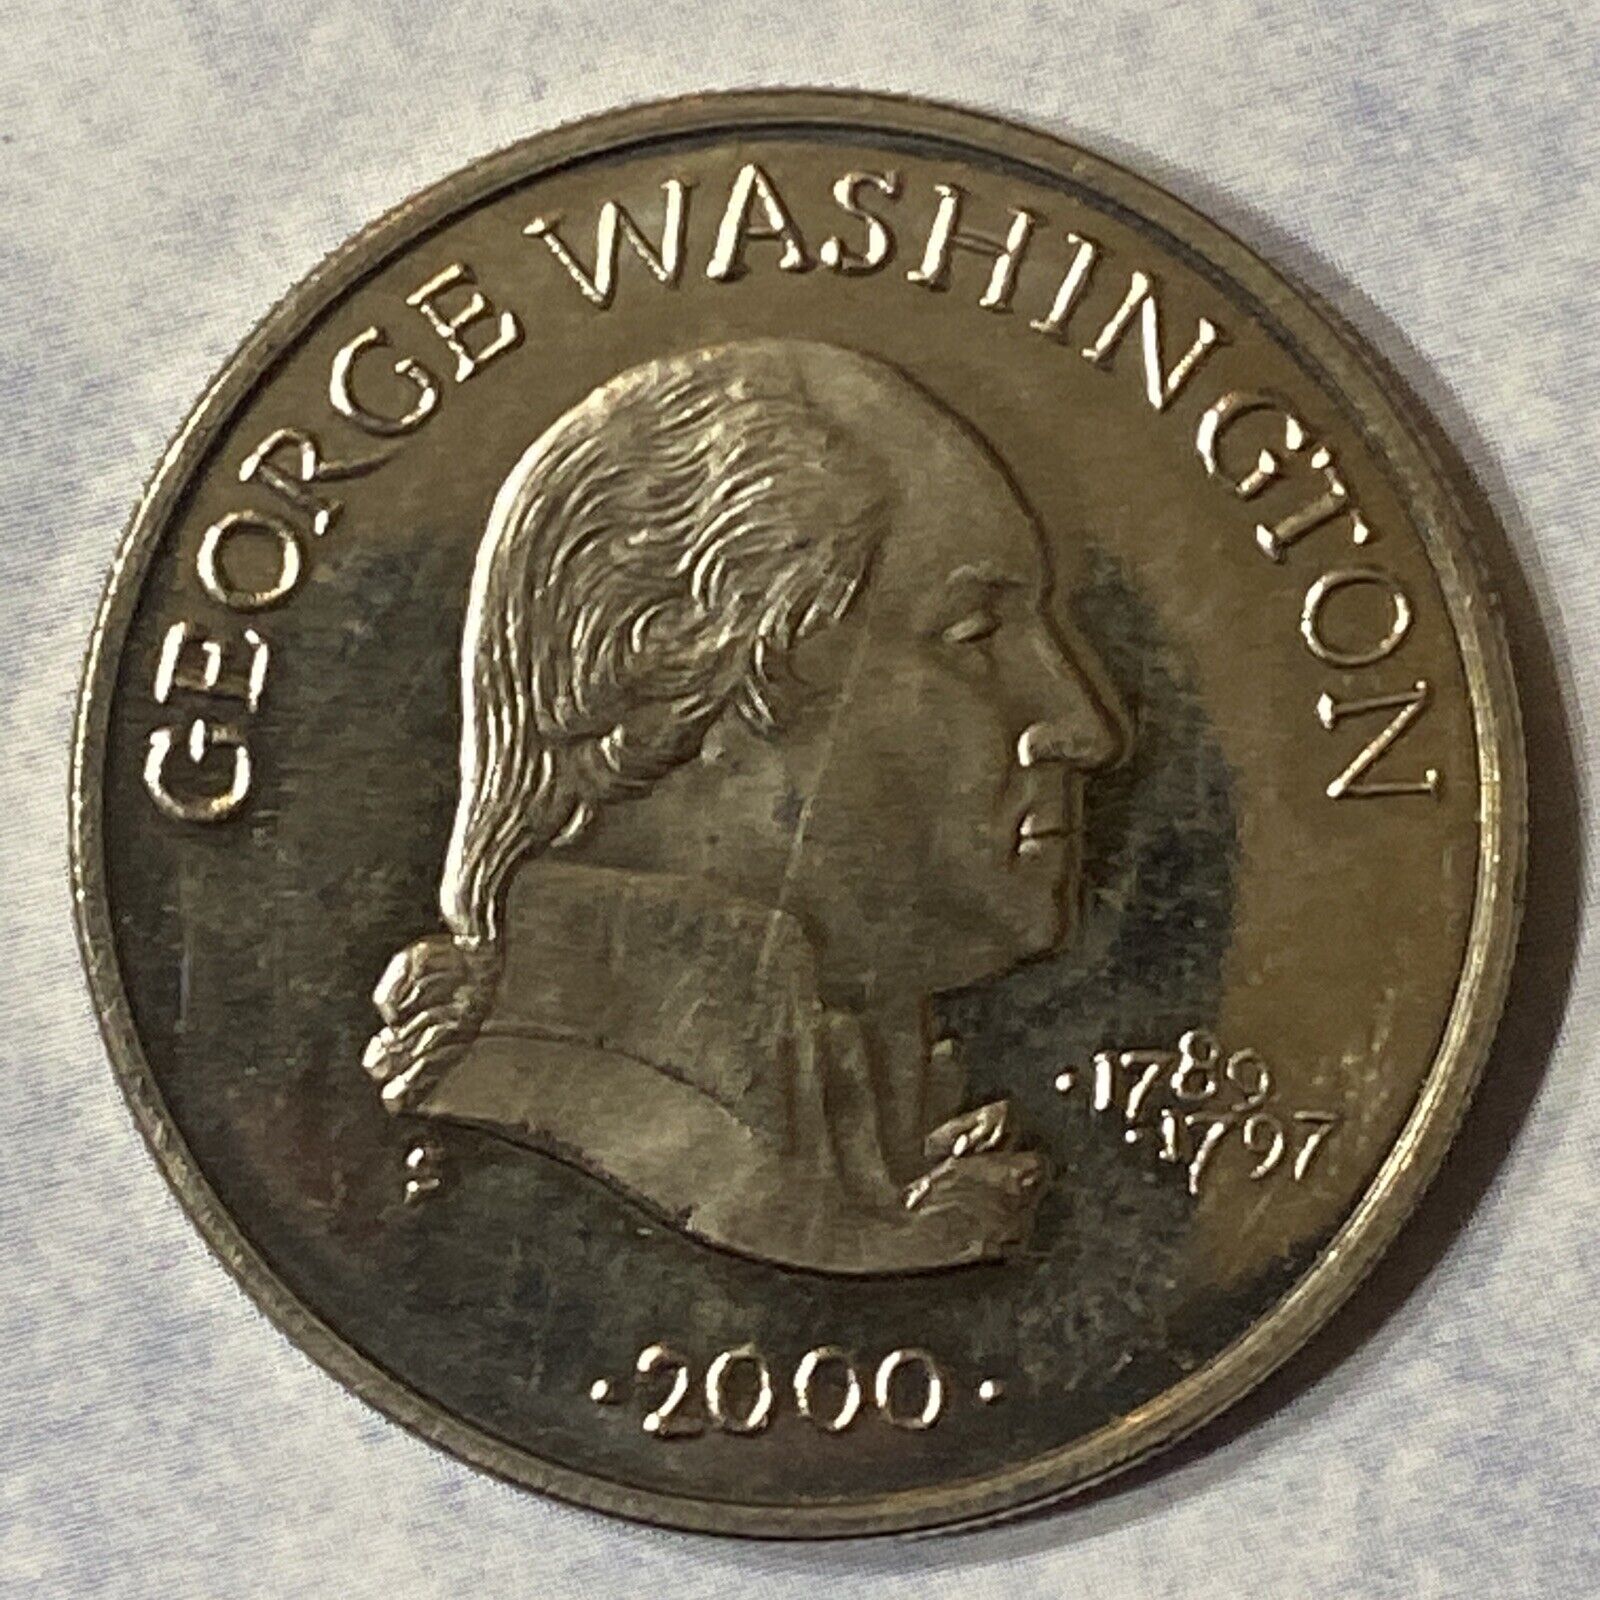 George Washington 2000 Republic Of Liberia Five Dollar $5 Coin - Collectors Coin